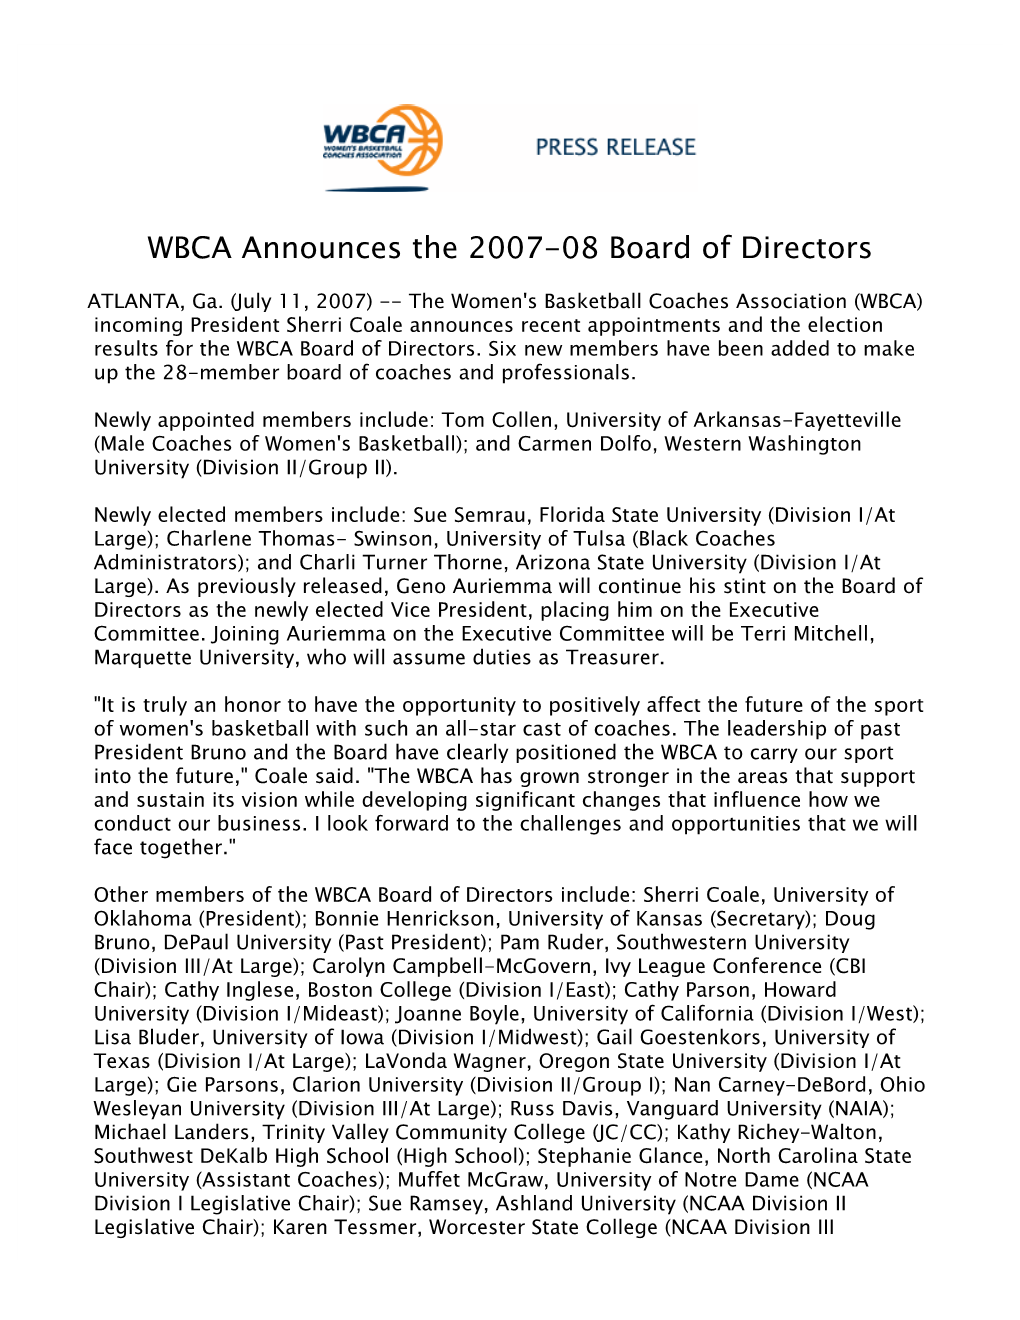 WBCA Announces the 2007-08 Board of Directors 2007-08 071107